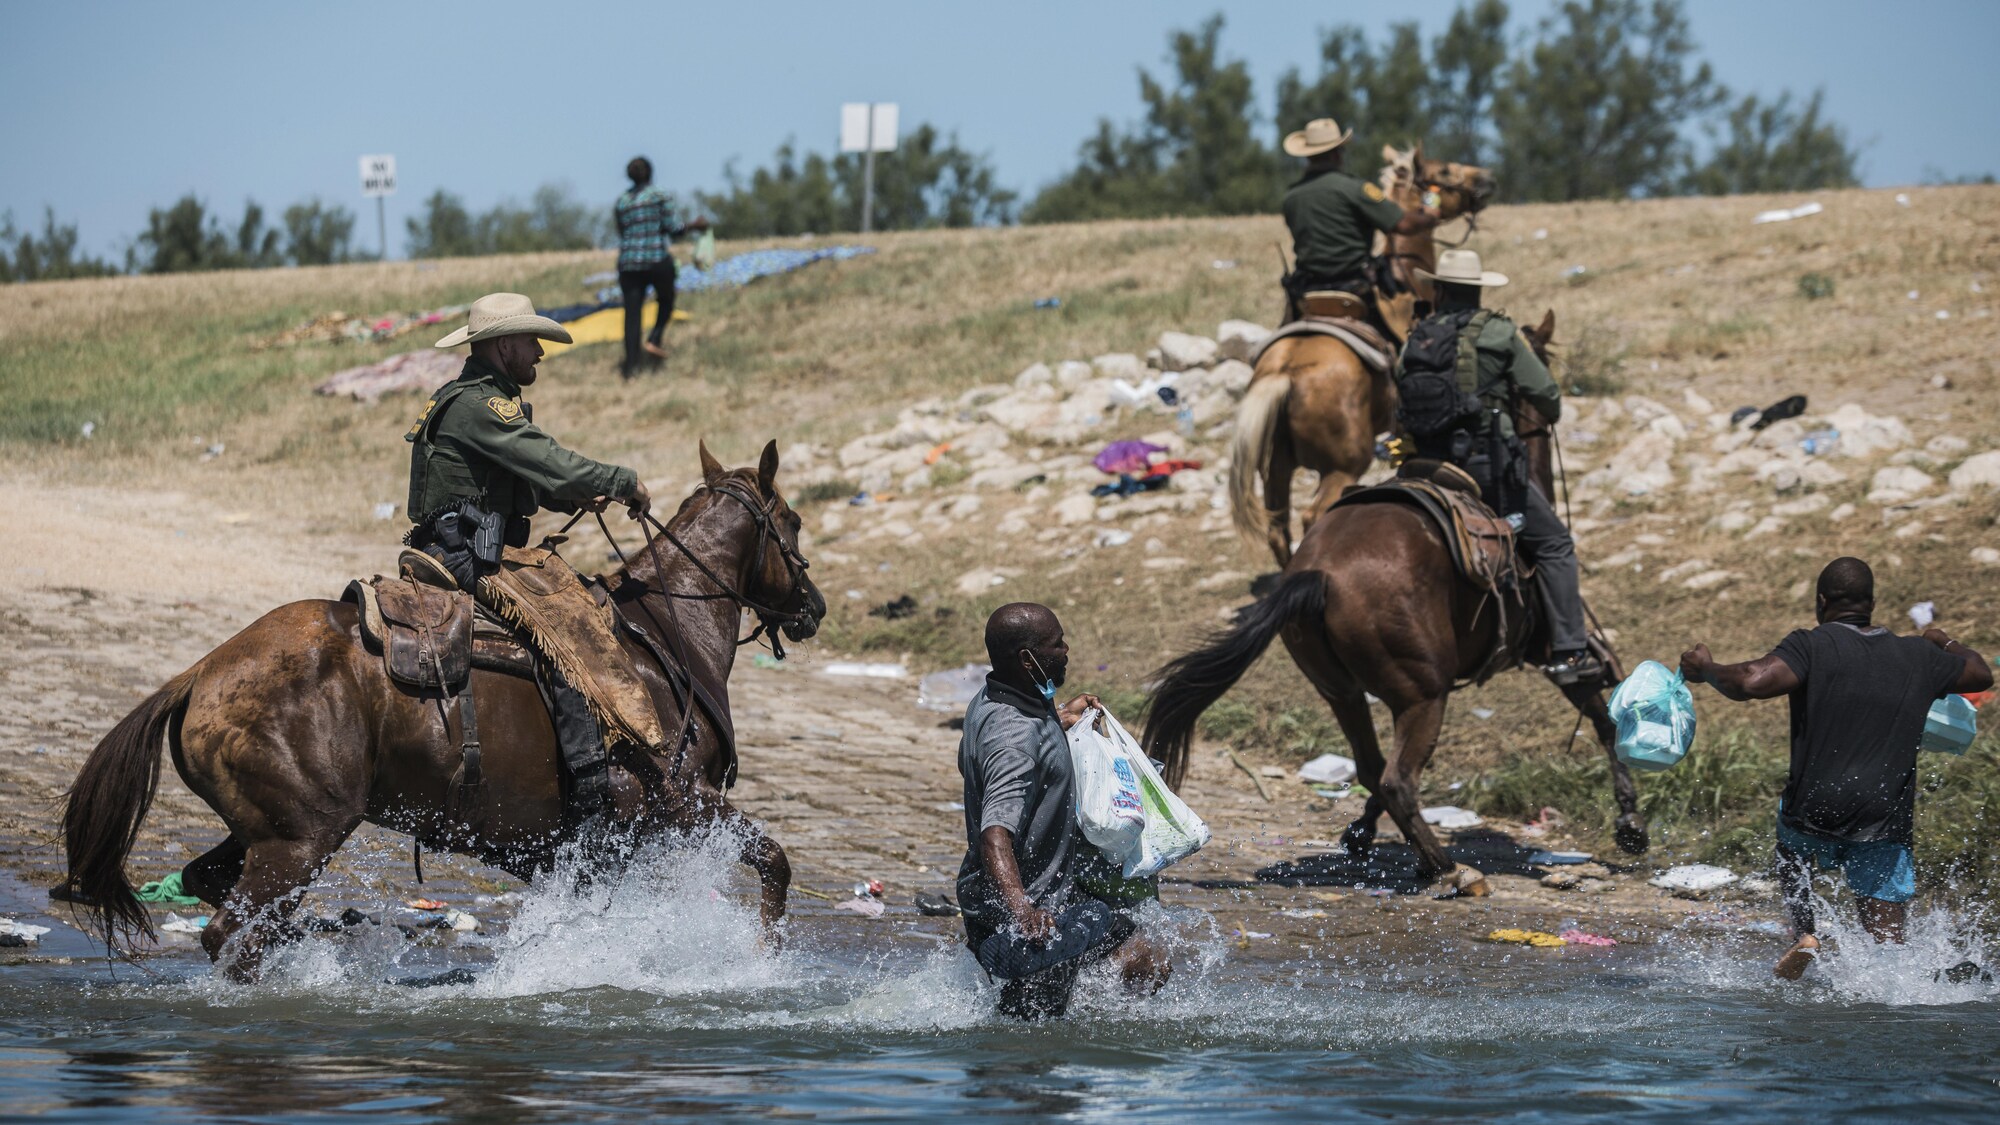 https://images.radio-canada.ca/q_auto,w_2000/v1/ici-info/16x9/migrants-etats-unis-del-rio-policiers-cheval.jpg